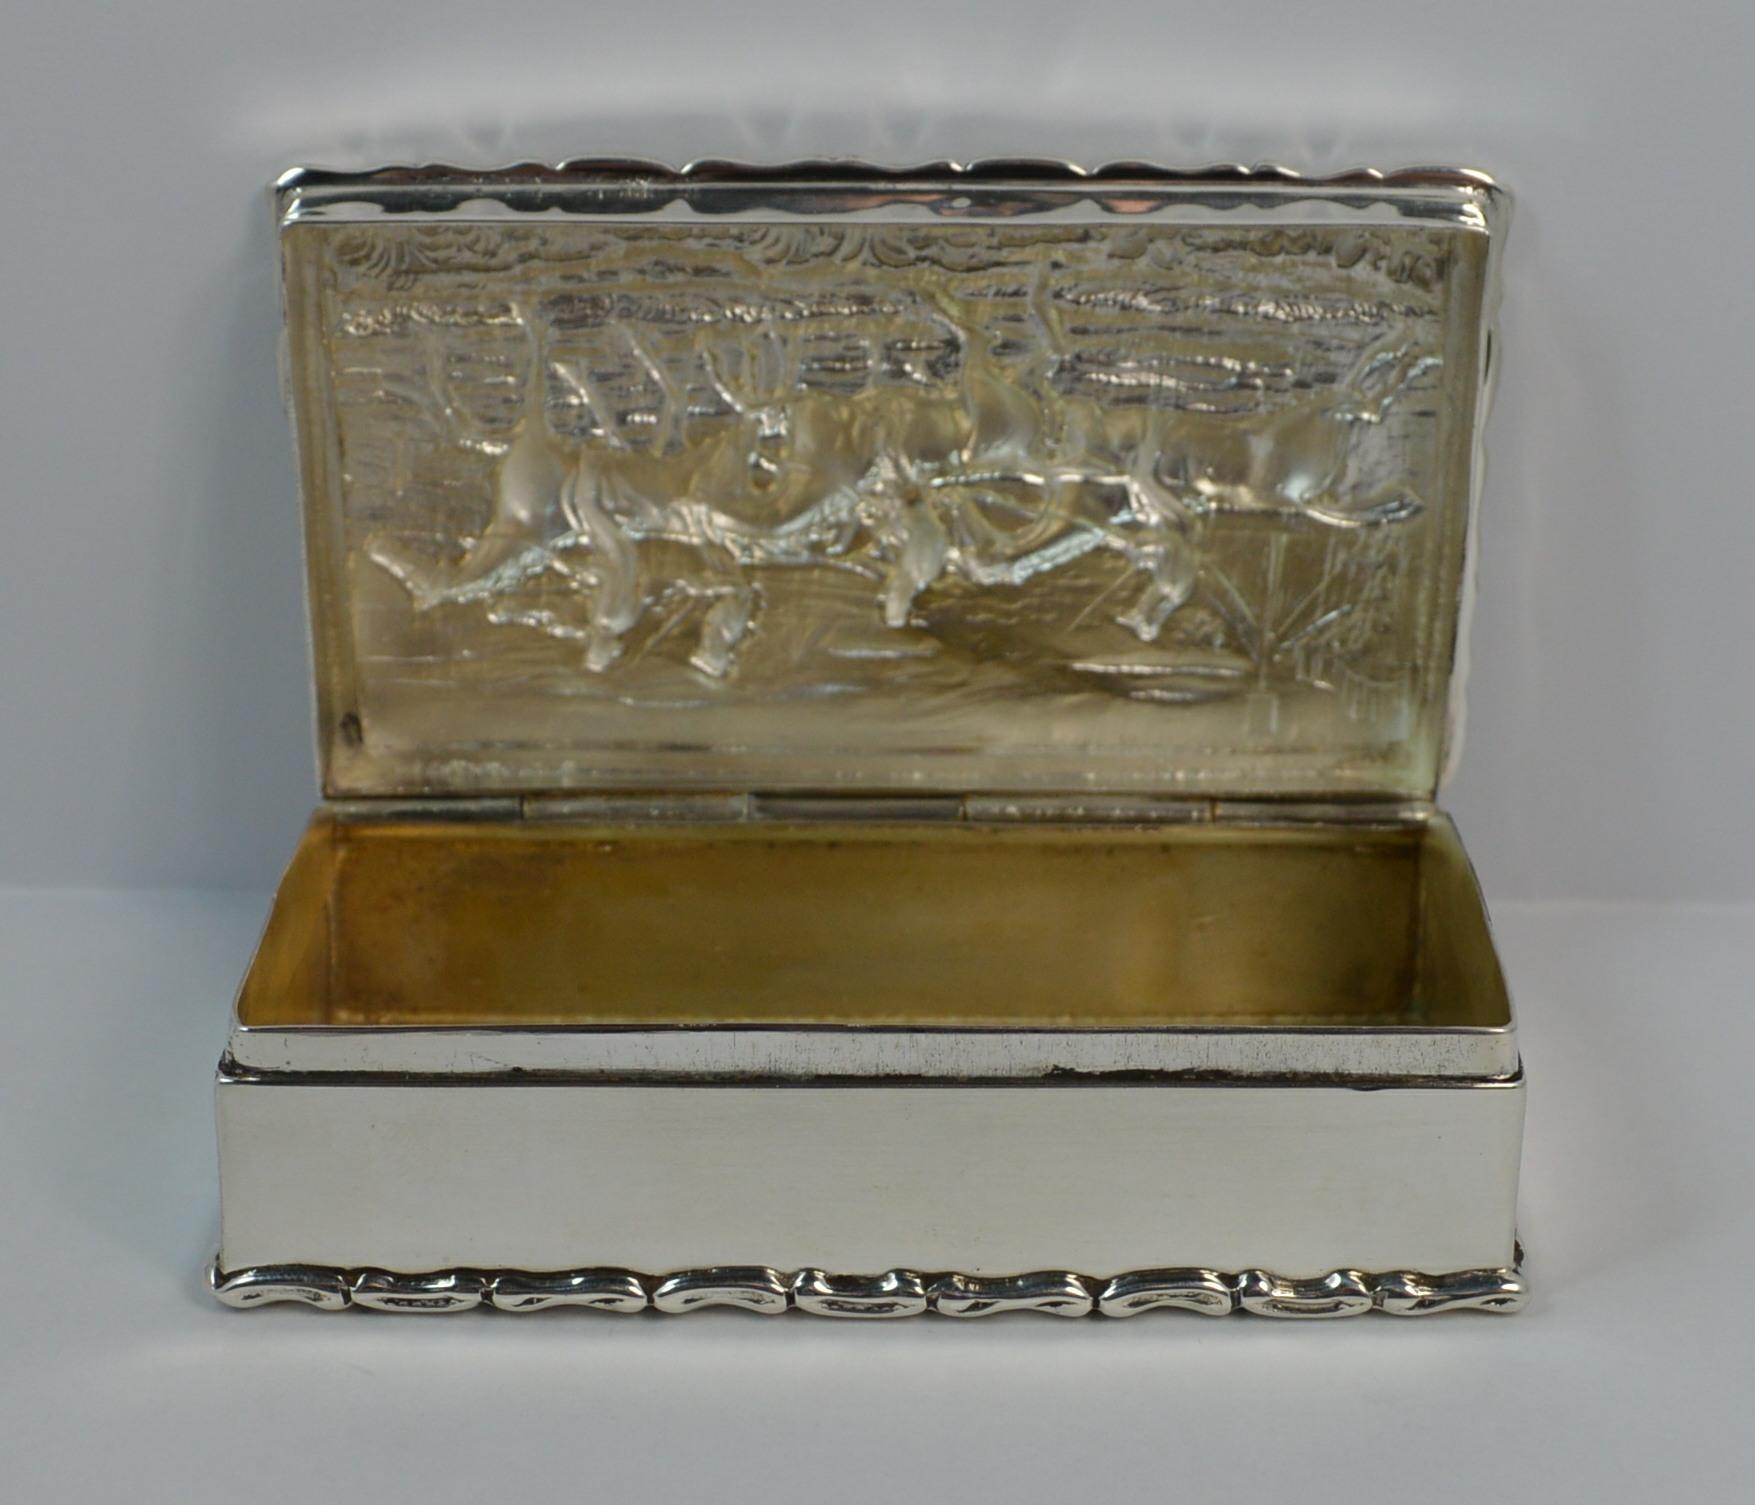 1902 Edwardian English Silver Snuff Box with Hunting Scene 6